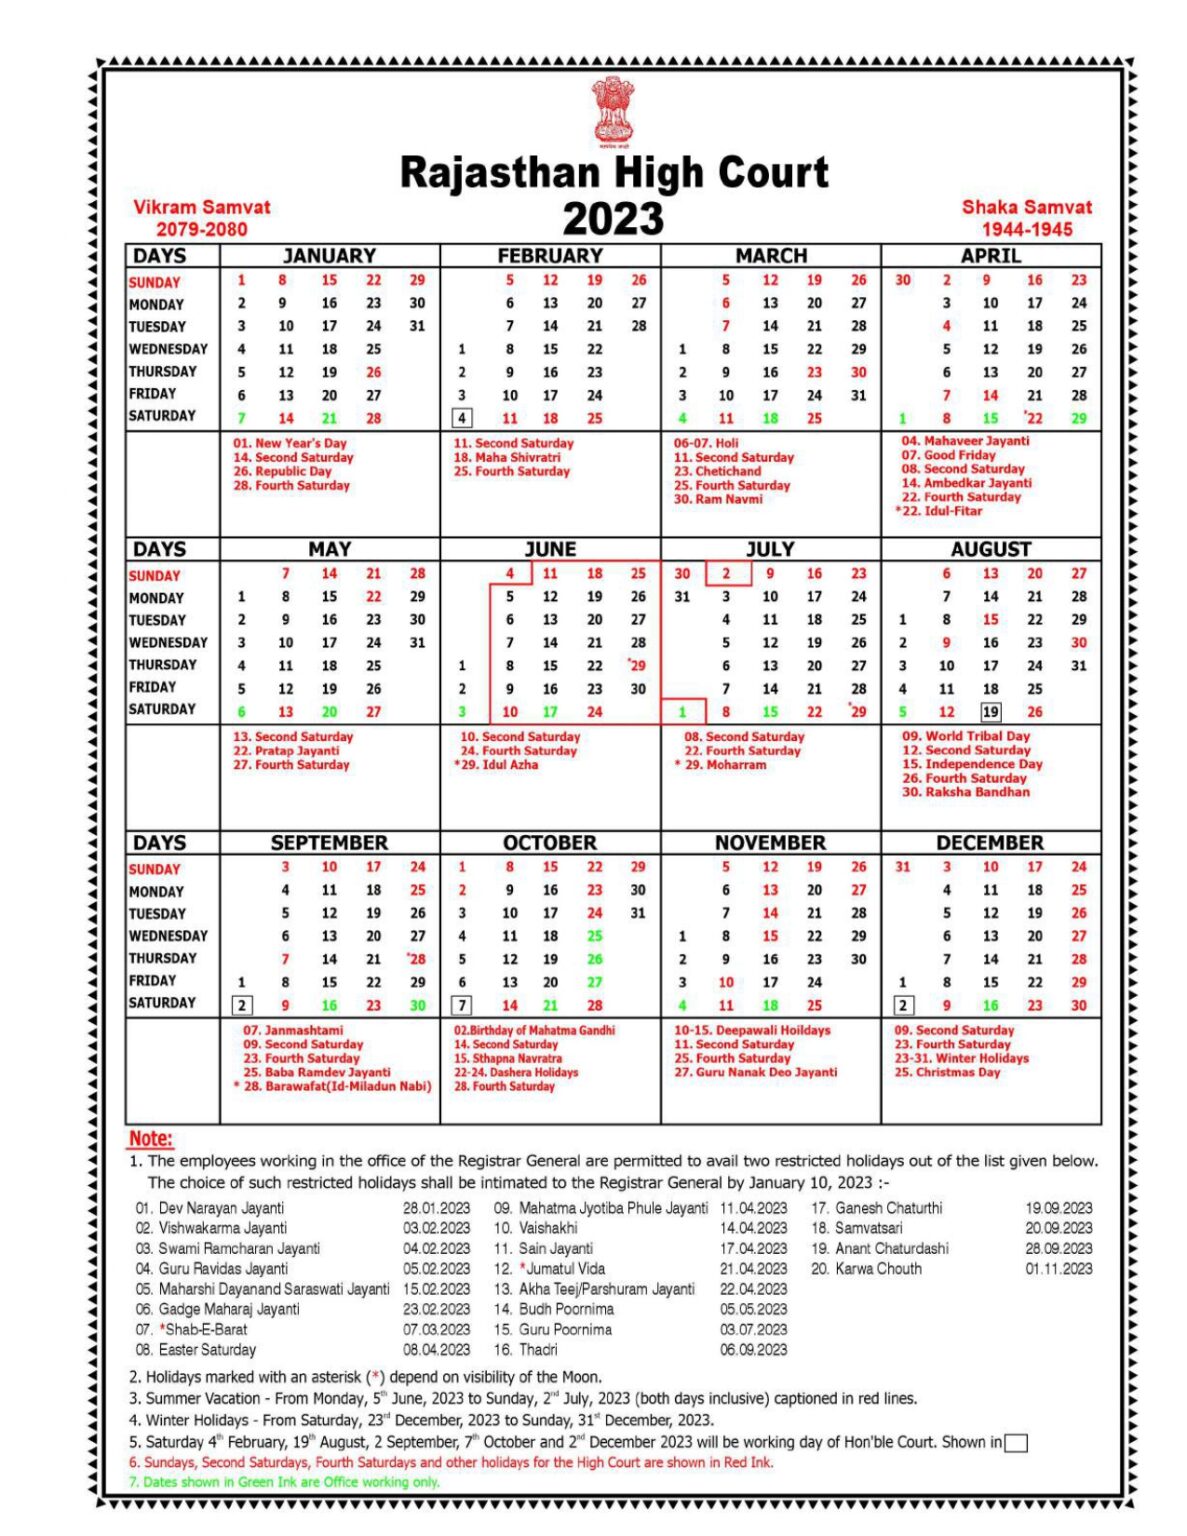 Rajasthan High Court Holiday 2023 राजस्थान उच्च न्यायालय अवकाश 2023